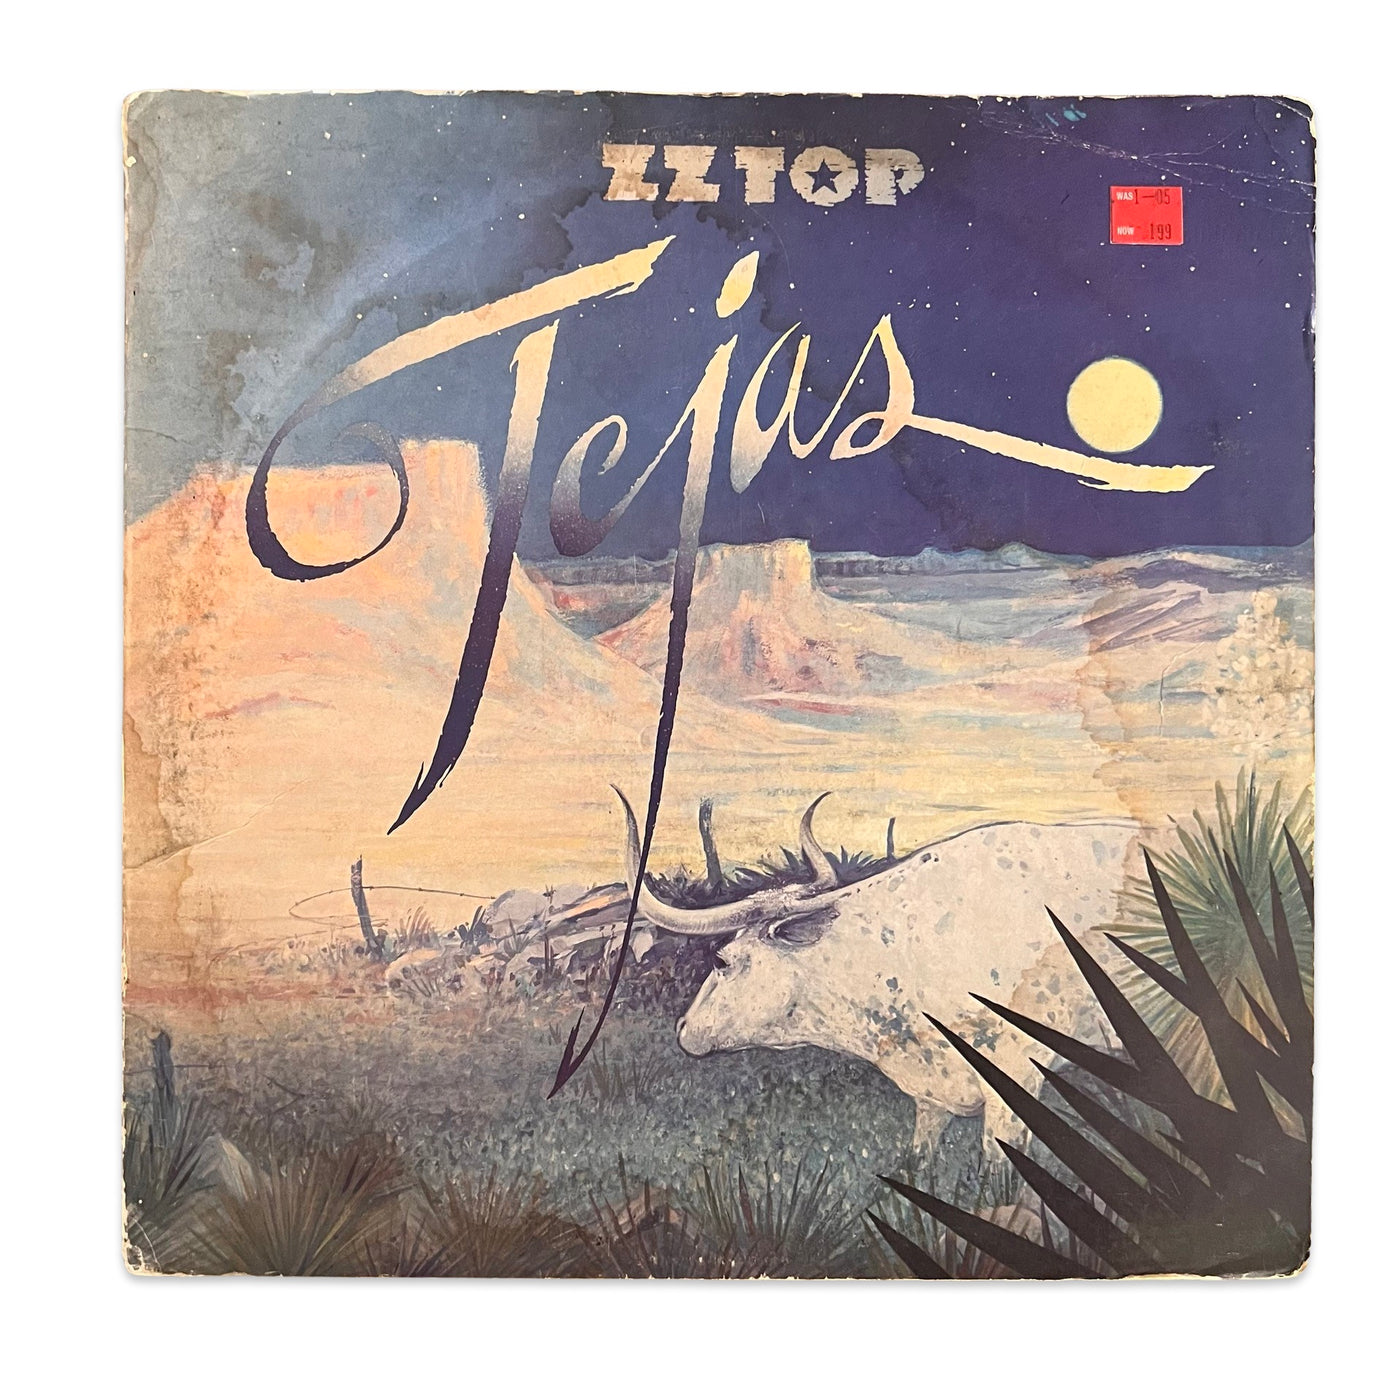 ZZ Top – Tejas (1976, RIchmond Pressing)